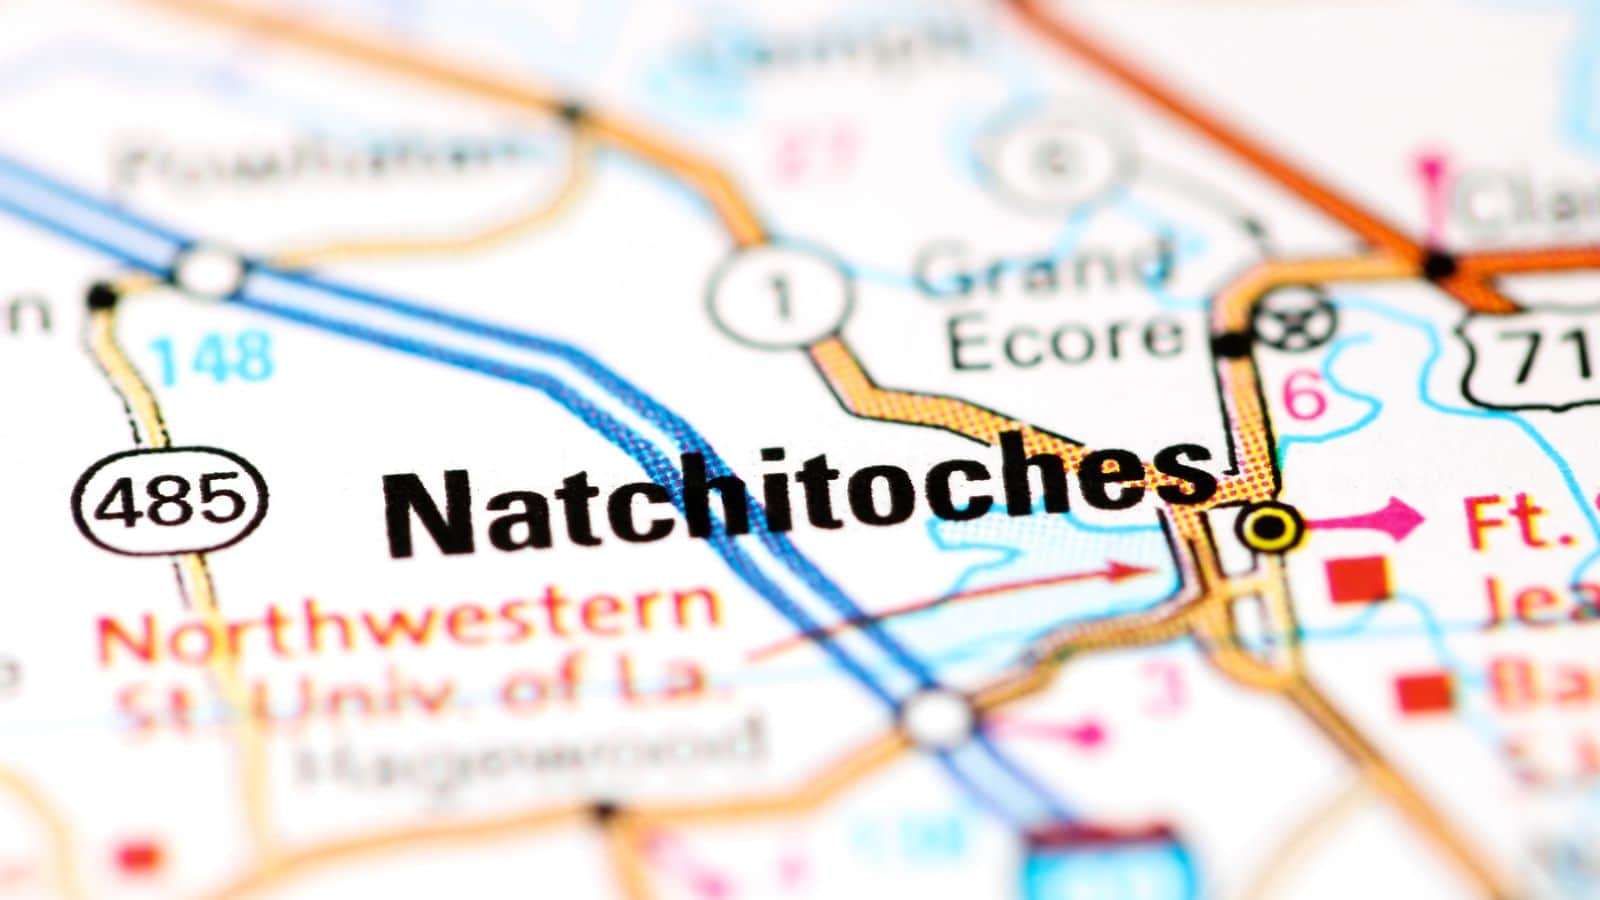 louisiana Natchitoches